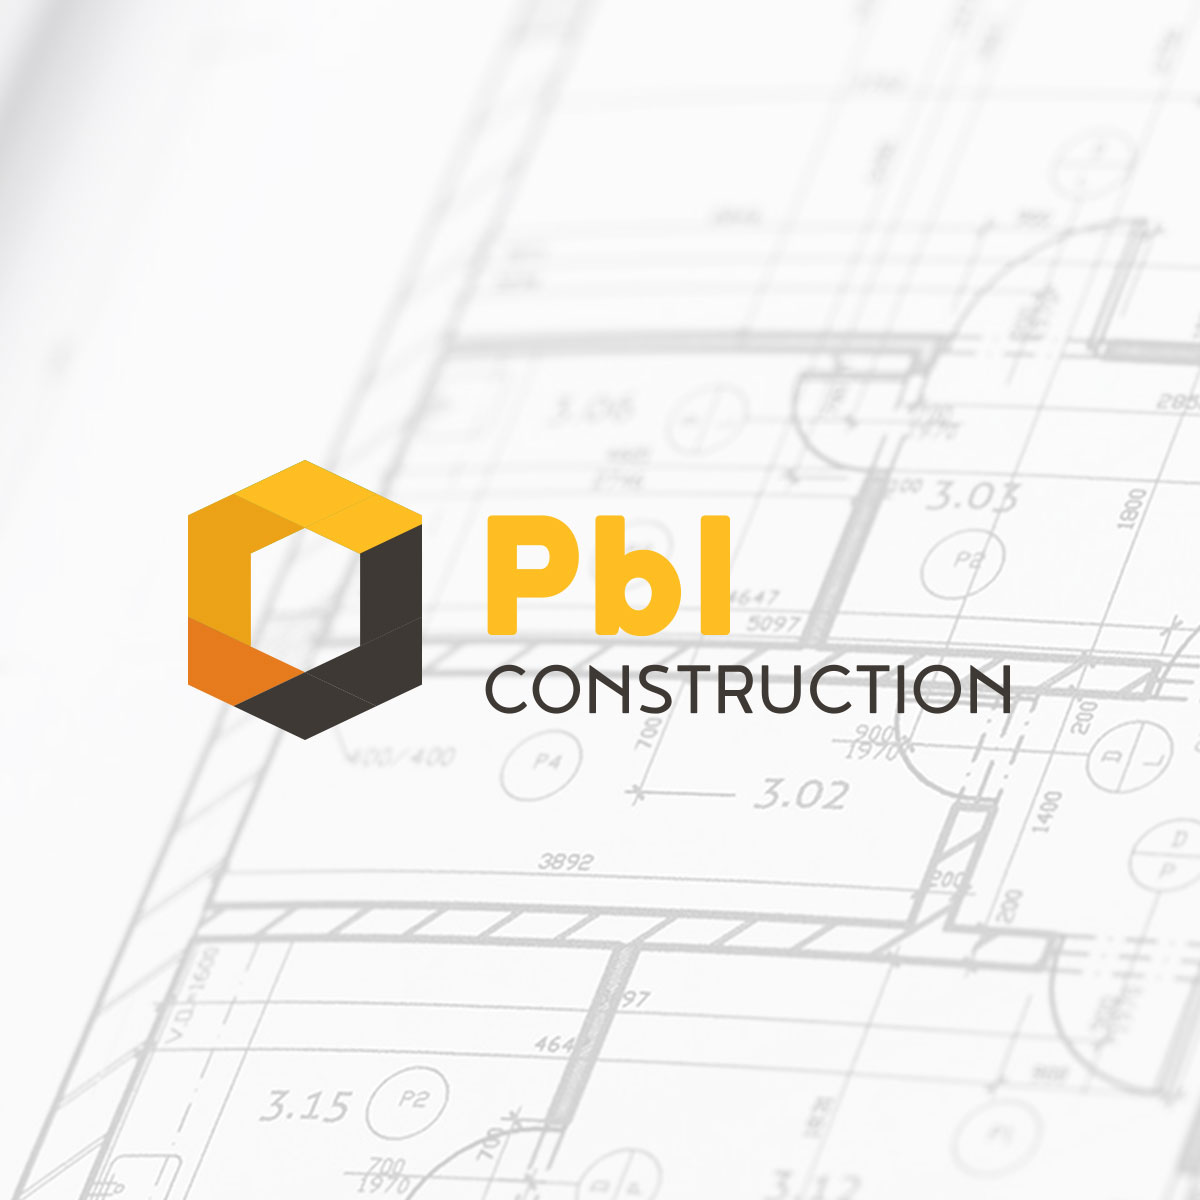 Service – PBL Construction